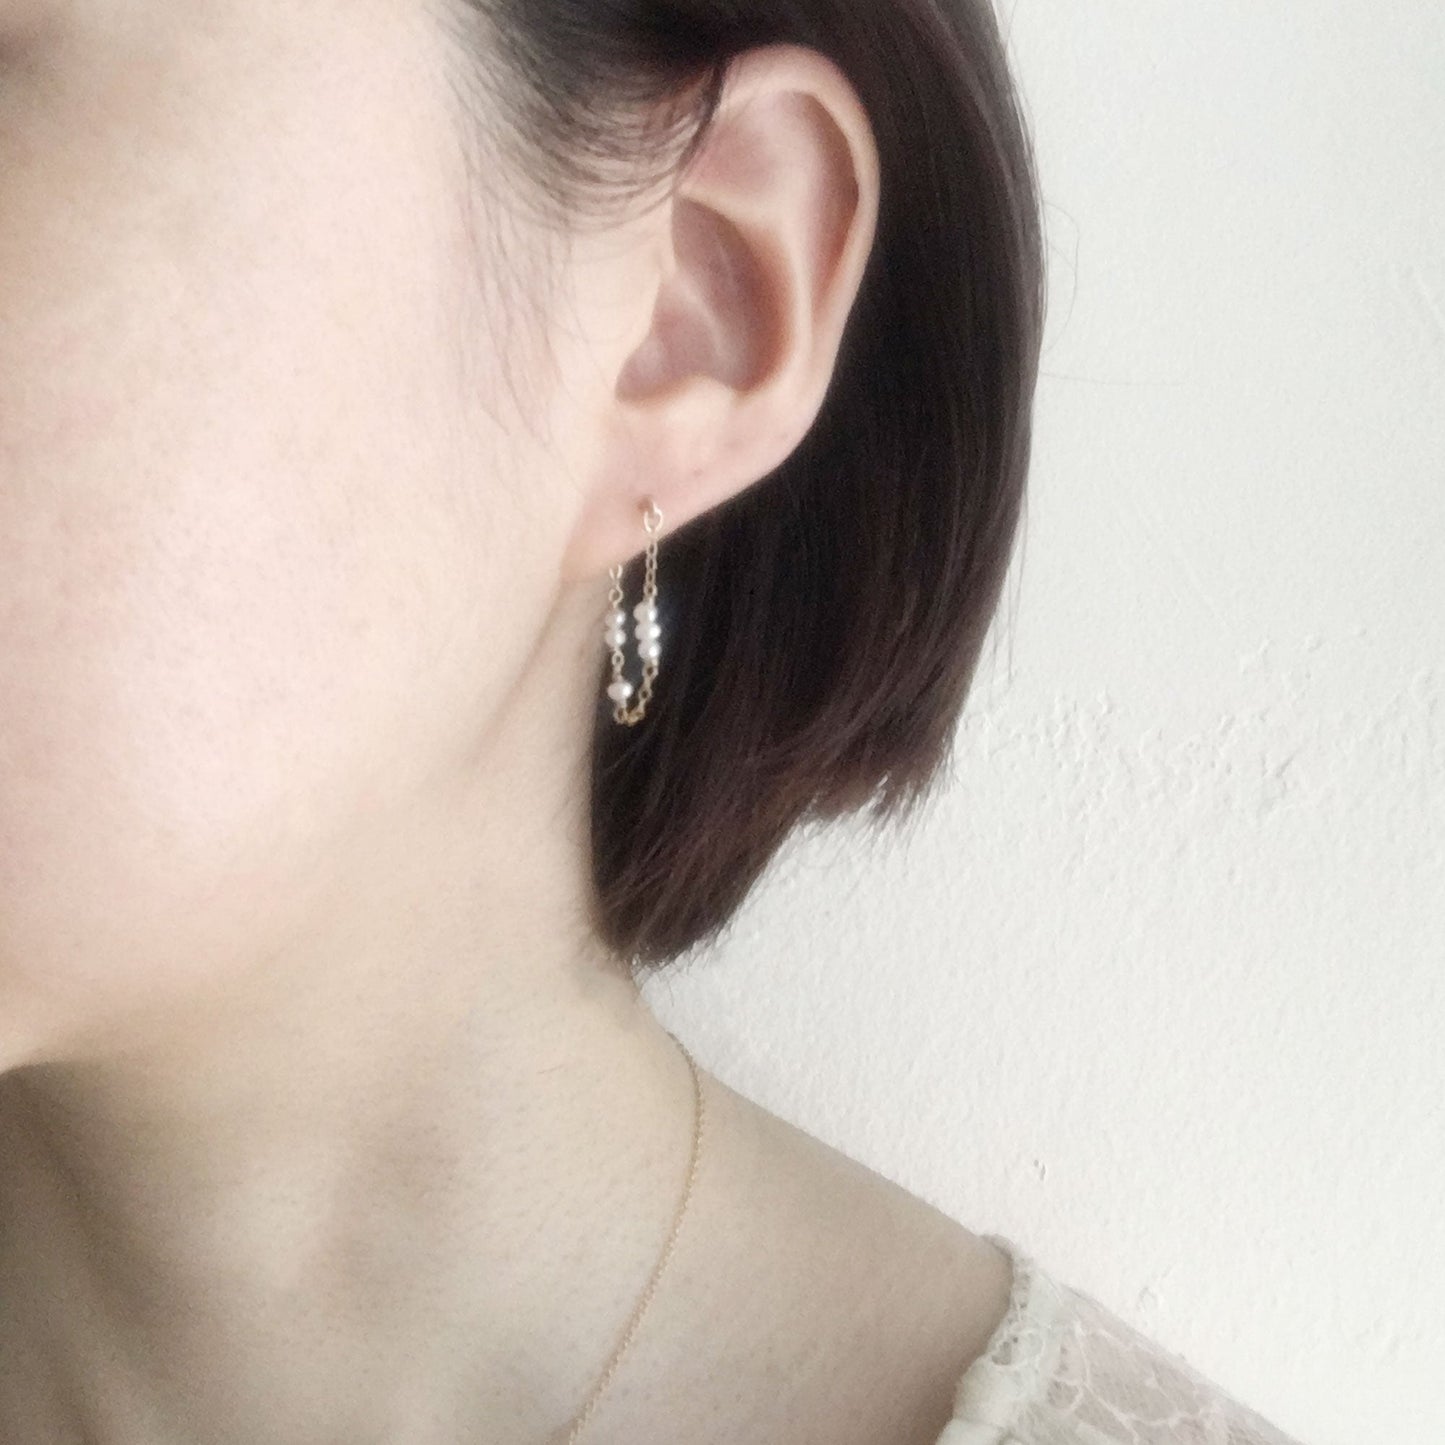 Tiny Gemstone Chain Hoop Stud Earrings - Aquamarine